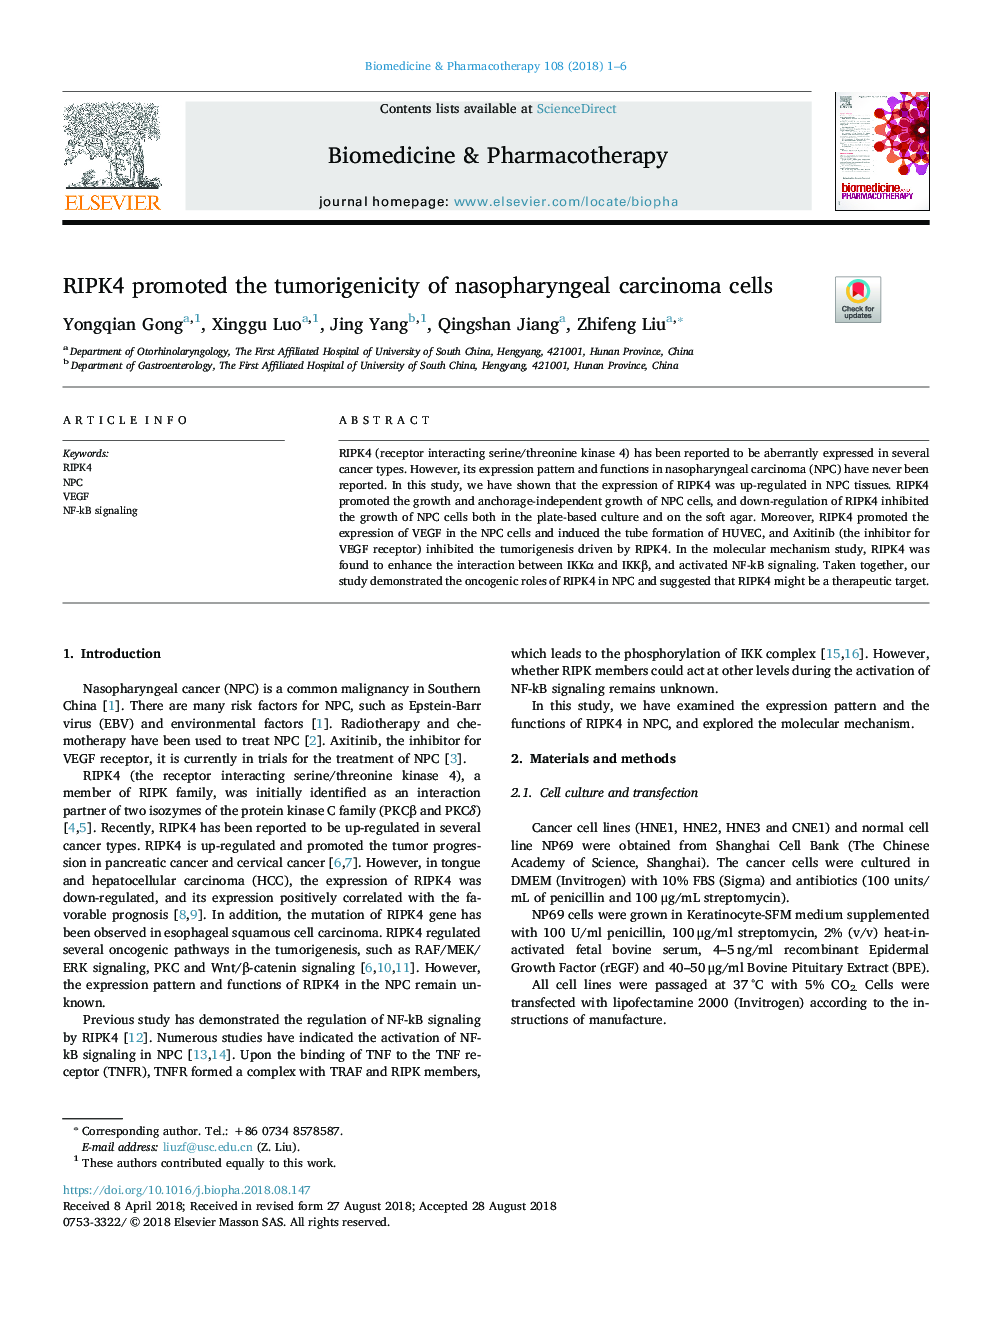 RIPK4 promoted the tumorigenicity of nasopharyngeal carcinoma cells